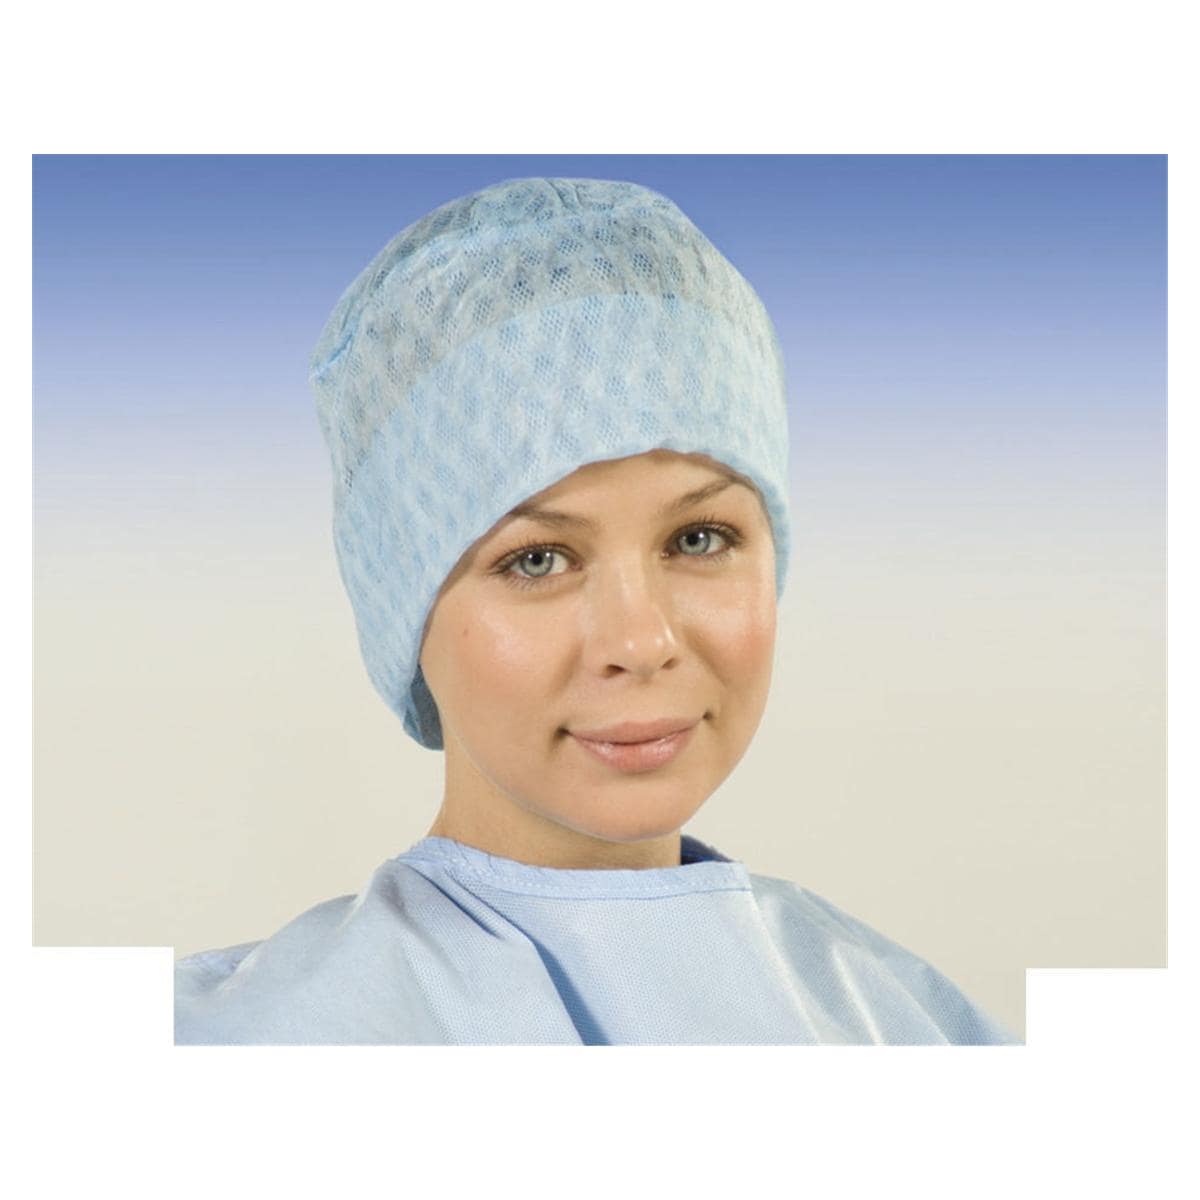 Charlottes chirurgicales - Unisex, bleu clair 10.M0009 - 100 pcs